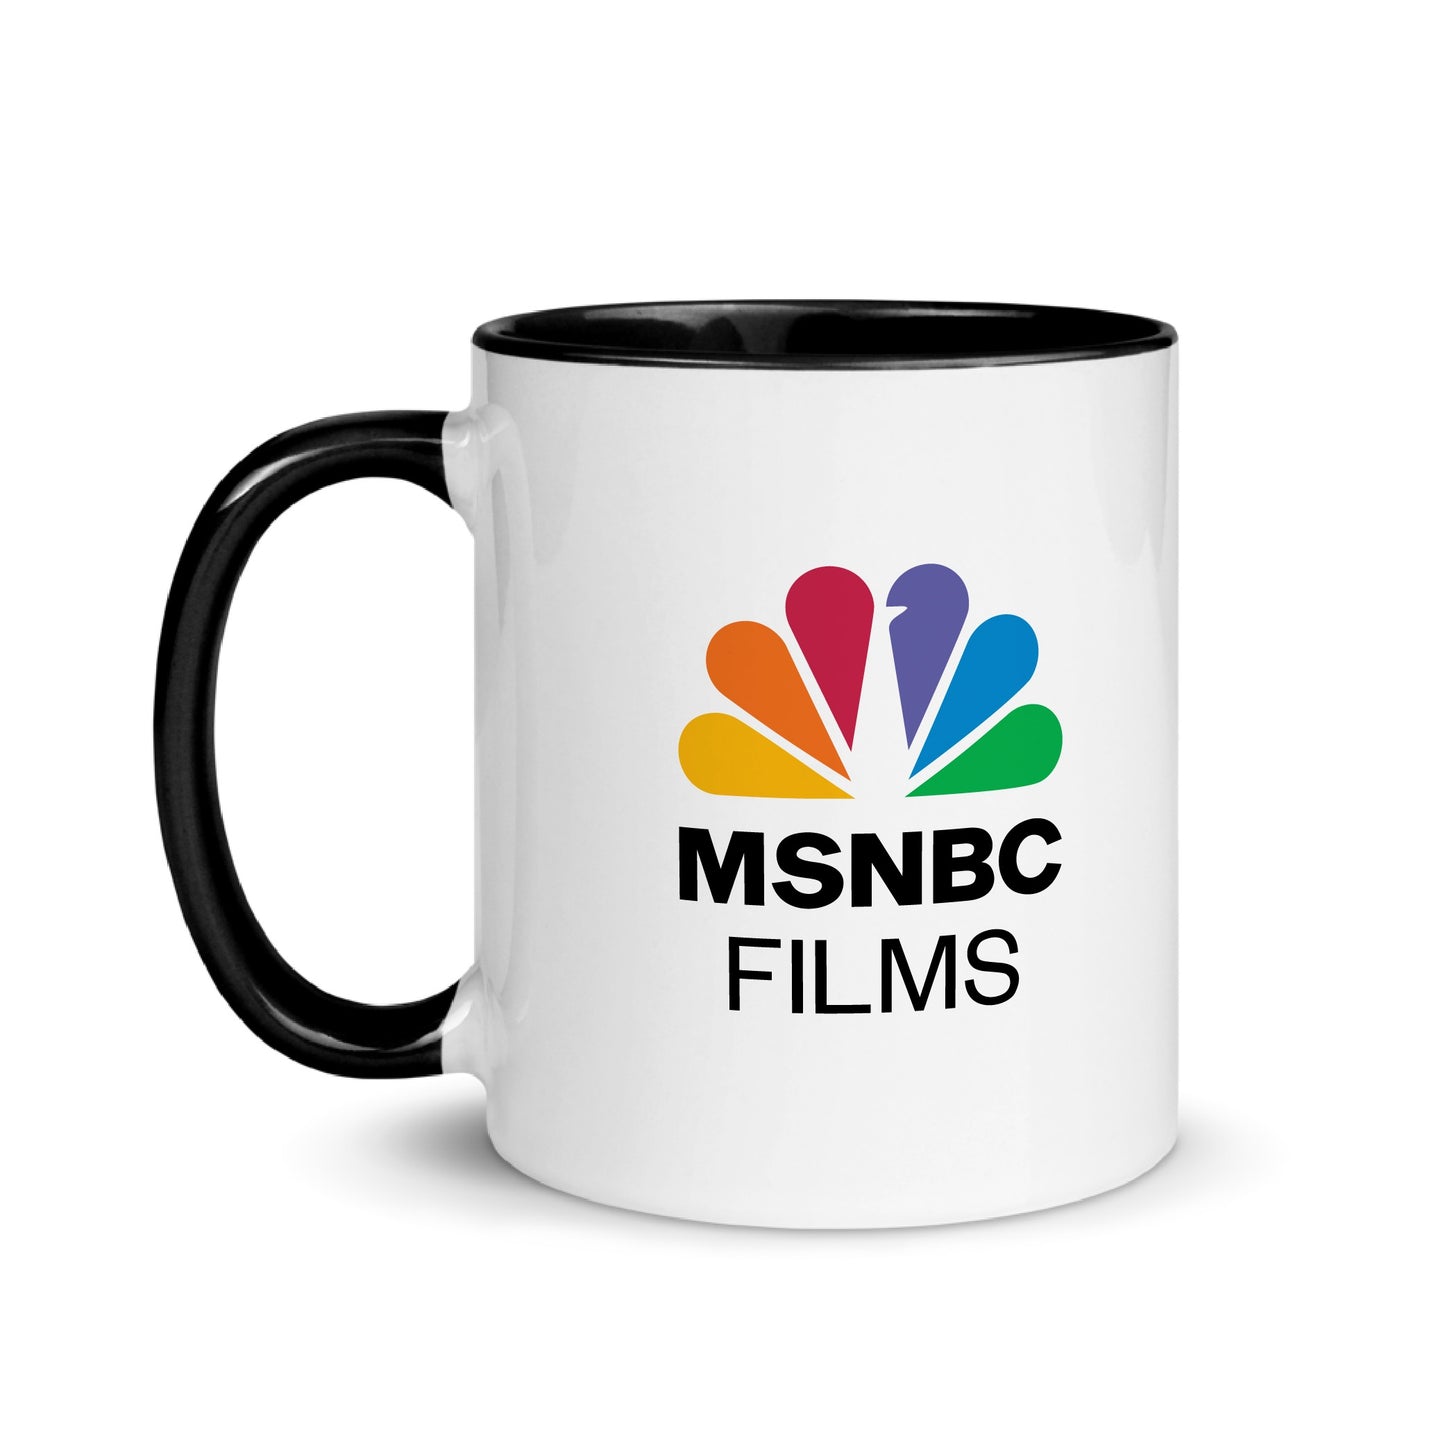 MSNBC Films Logo Mug